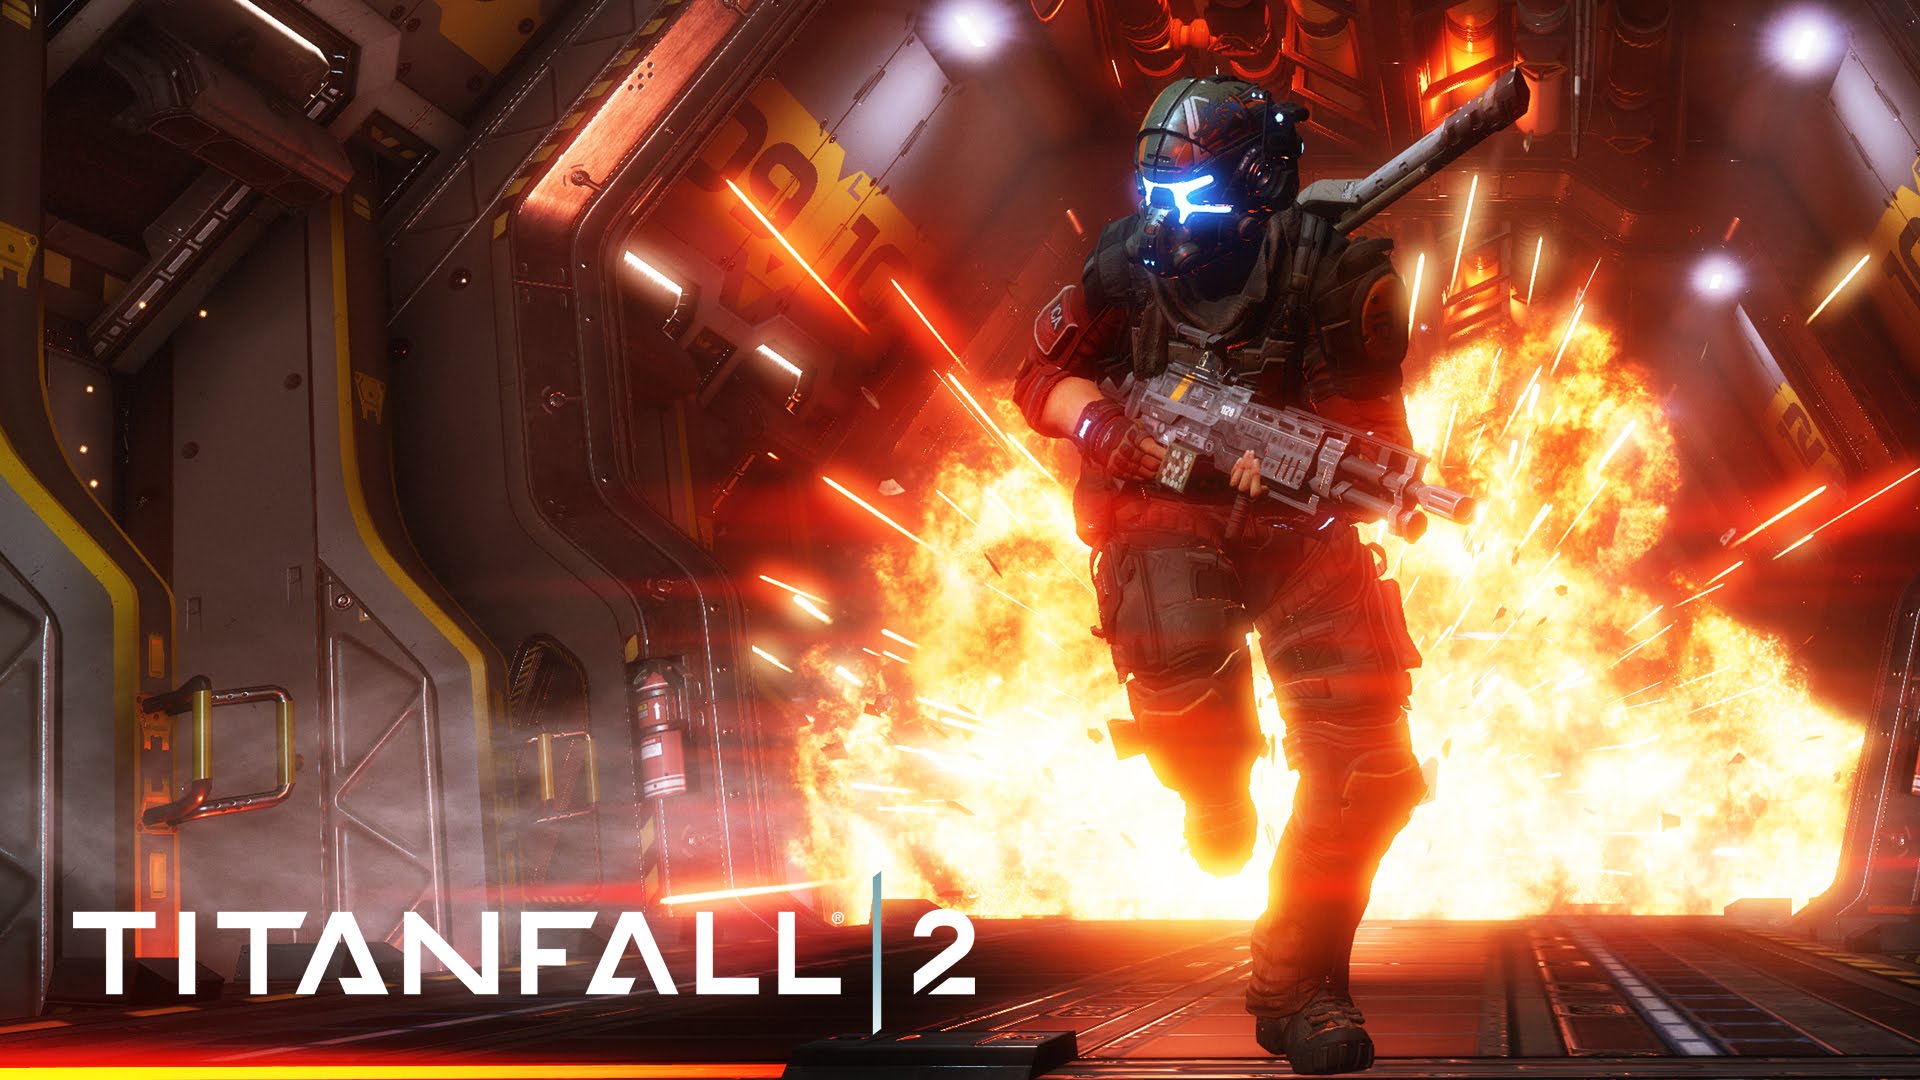 Titanfall 2 : Single Player Gameplay Vision